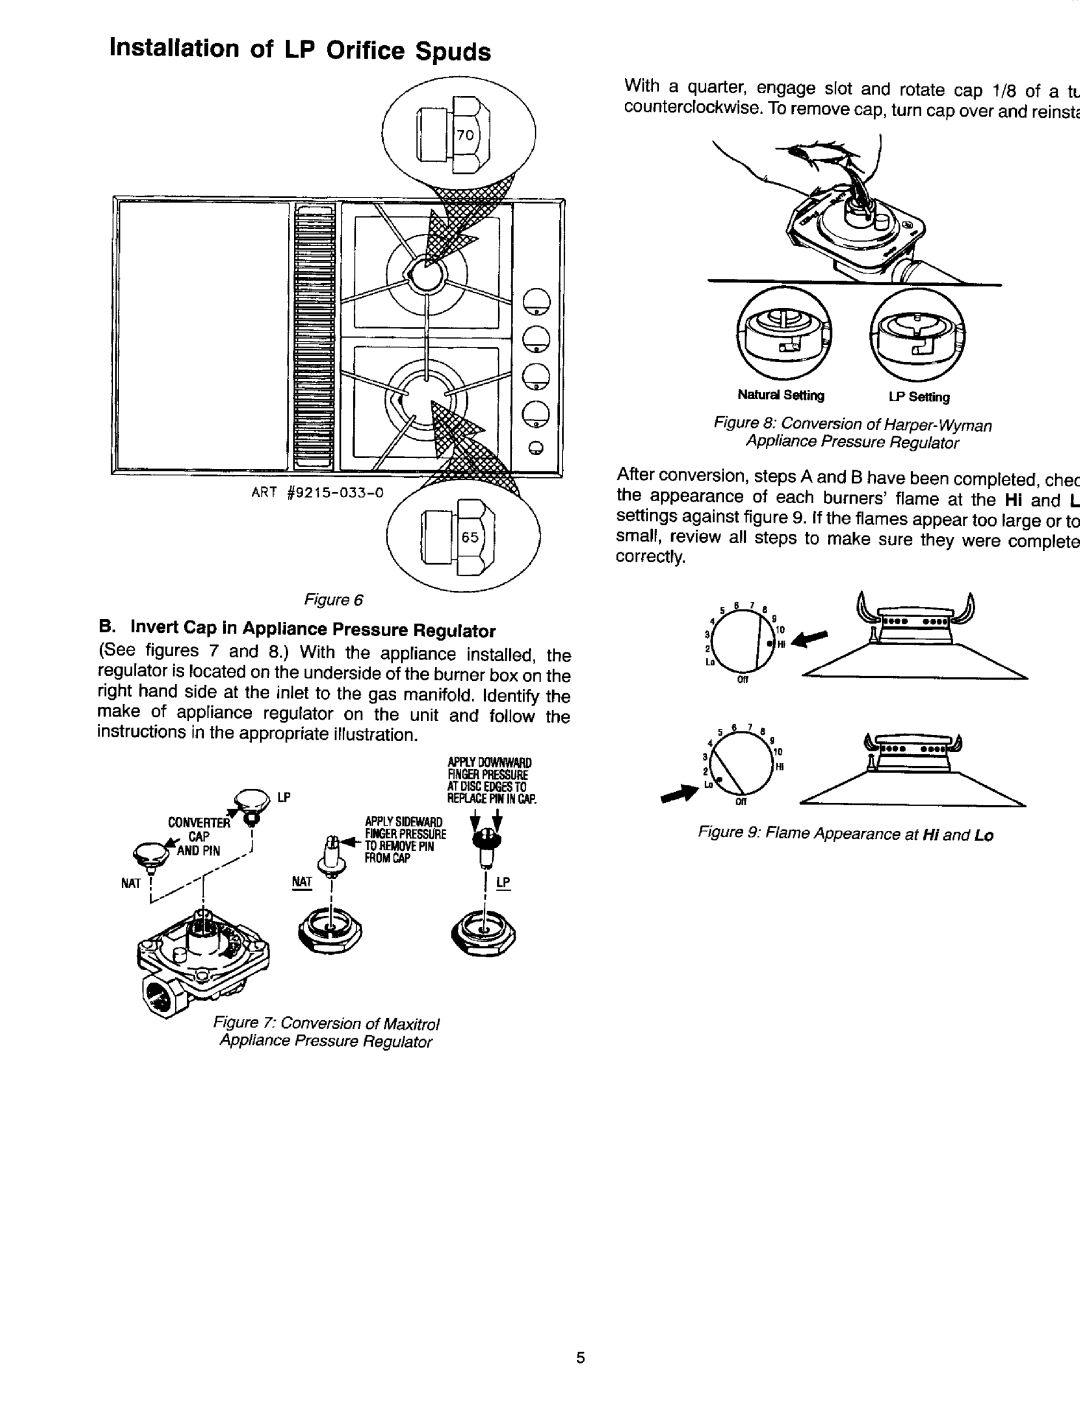 Jenn-Air Dual Fuel Cooktop dimensions Installation of LP Orifice Spuds, NATjl r, I 1o 